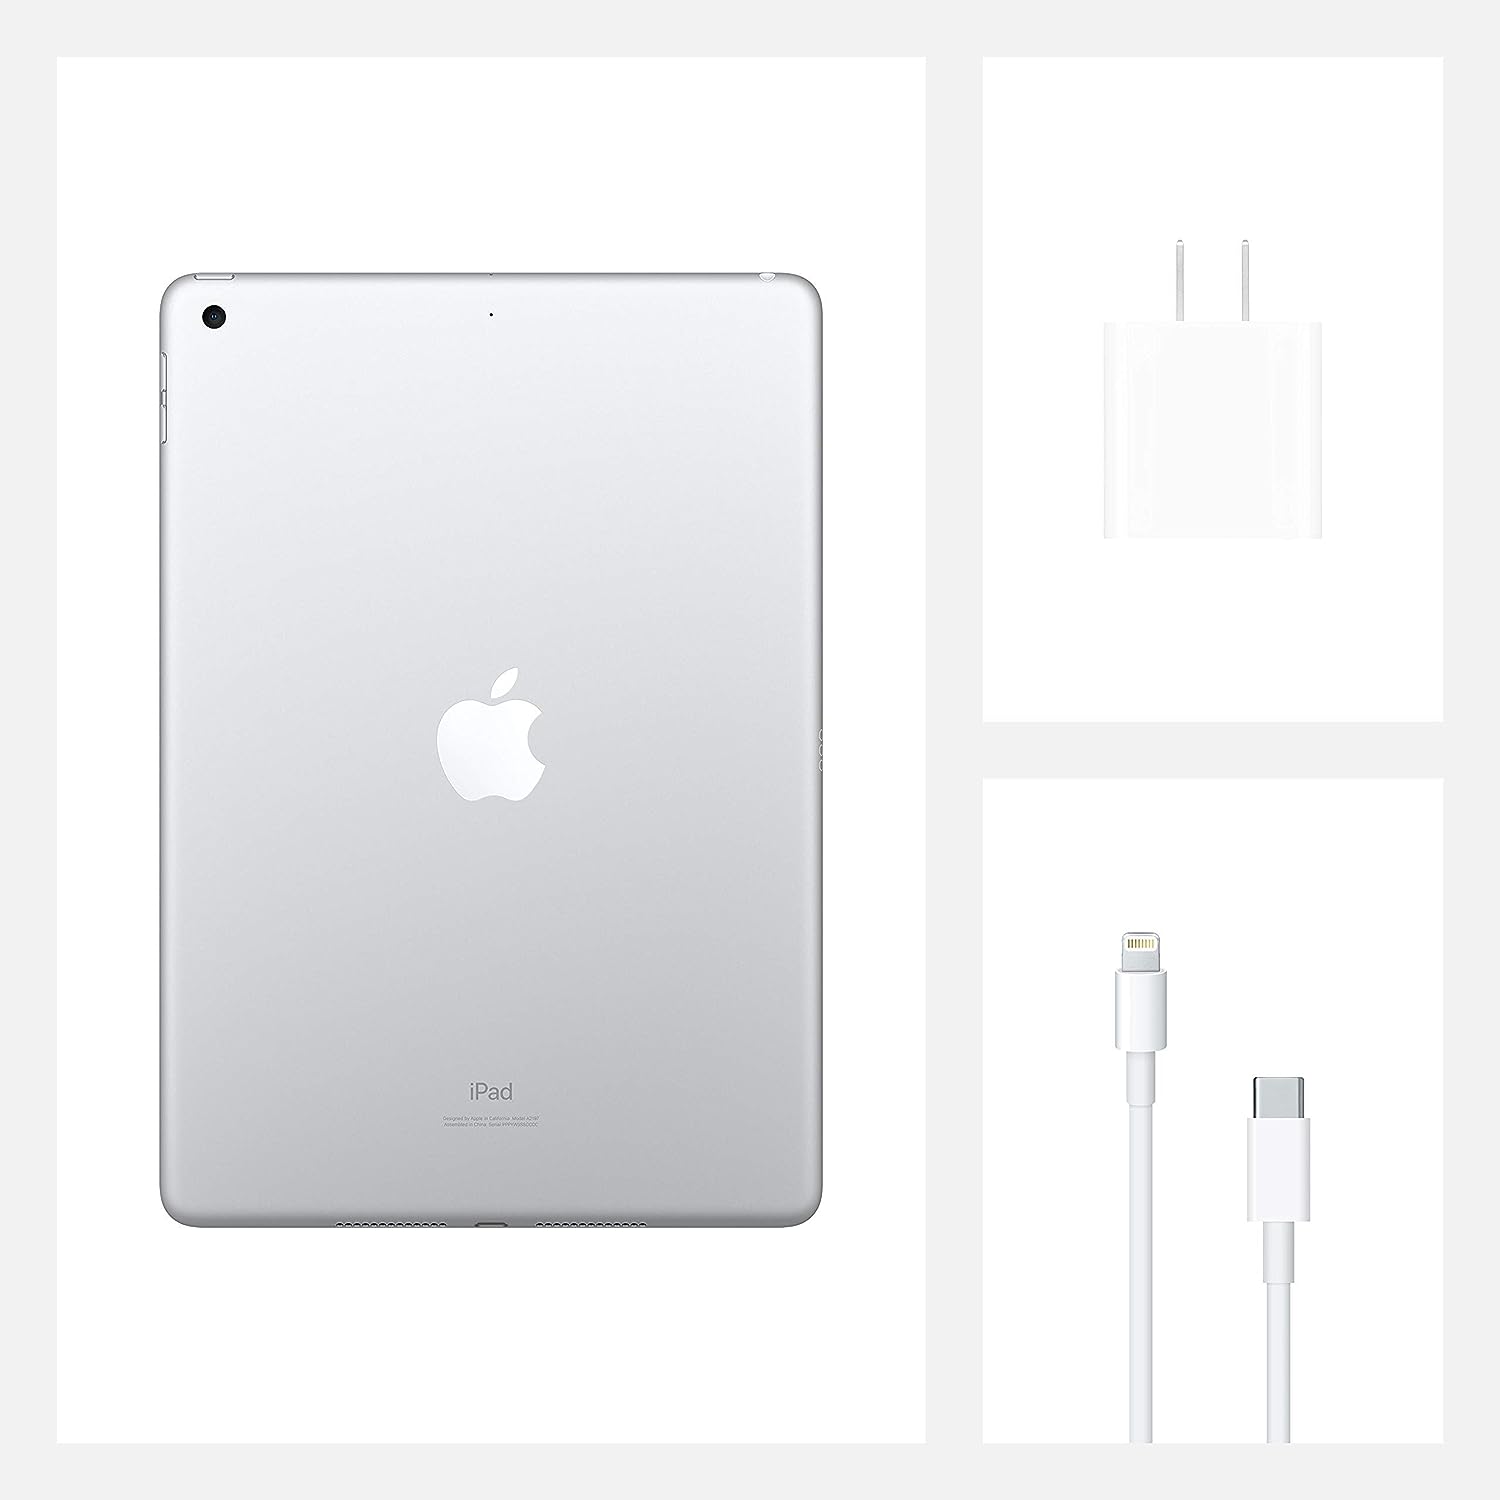 2020 Apple iPad Review